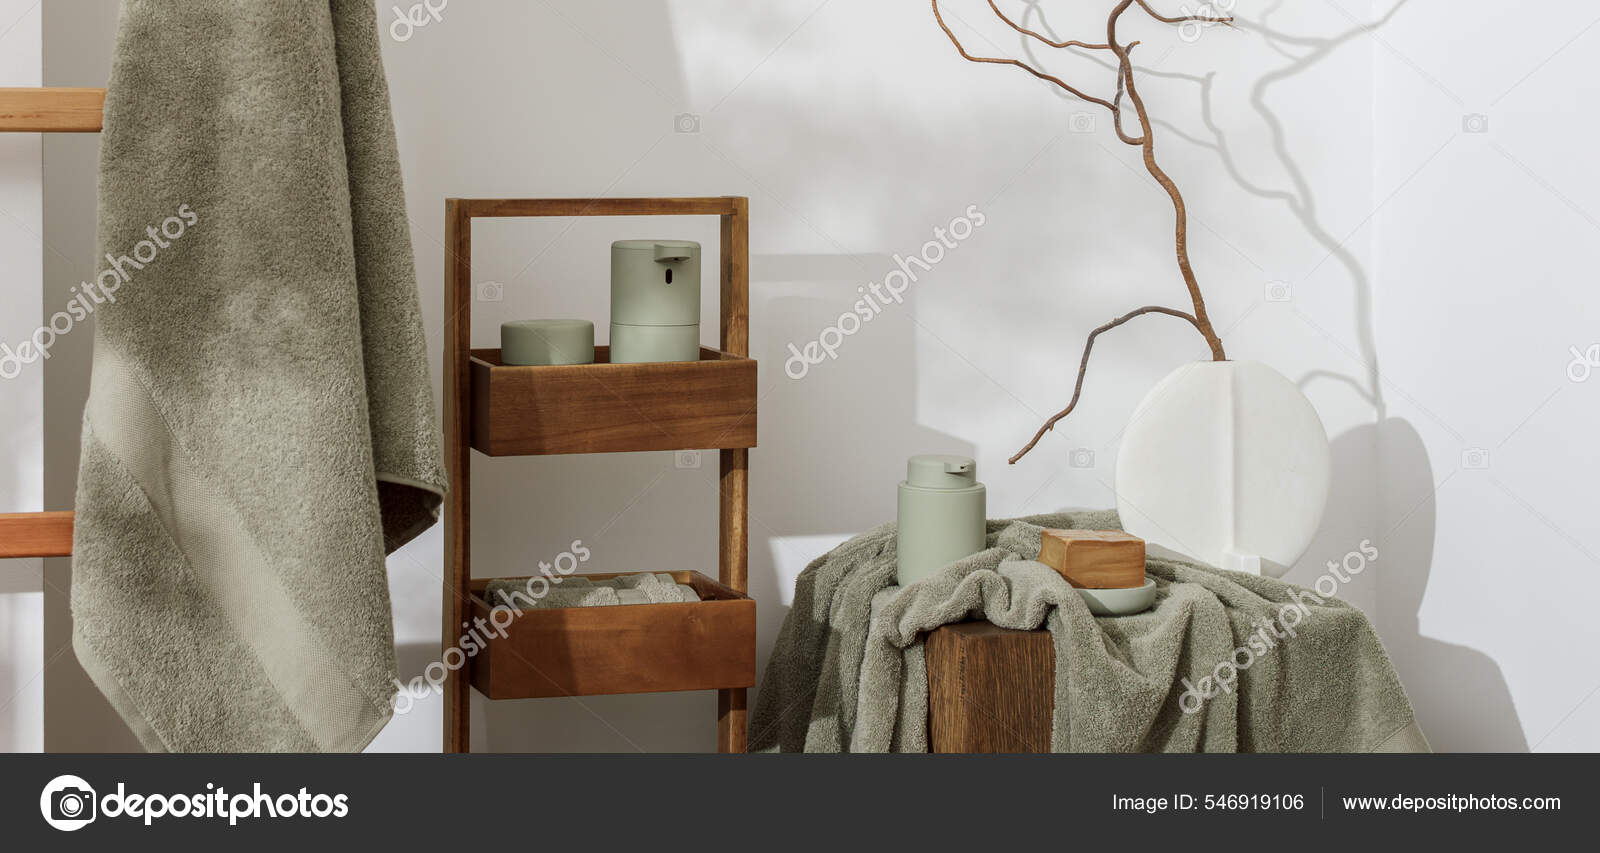 https://st.depositphotos.com/51181874/54691/i/1600/depositphotos_546919106-stock-photo-modern-aesthetic-bathroom-accessories-eucalyptus.jpg